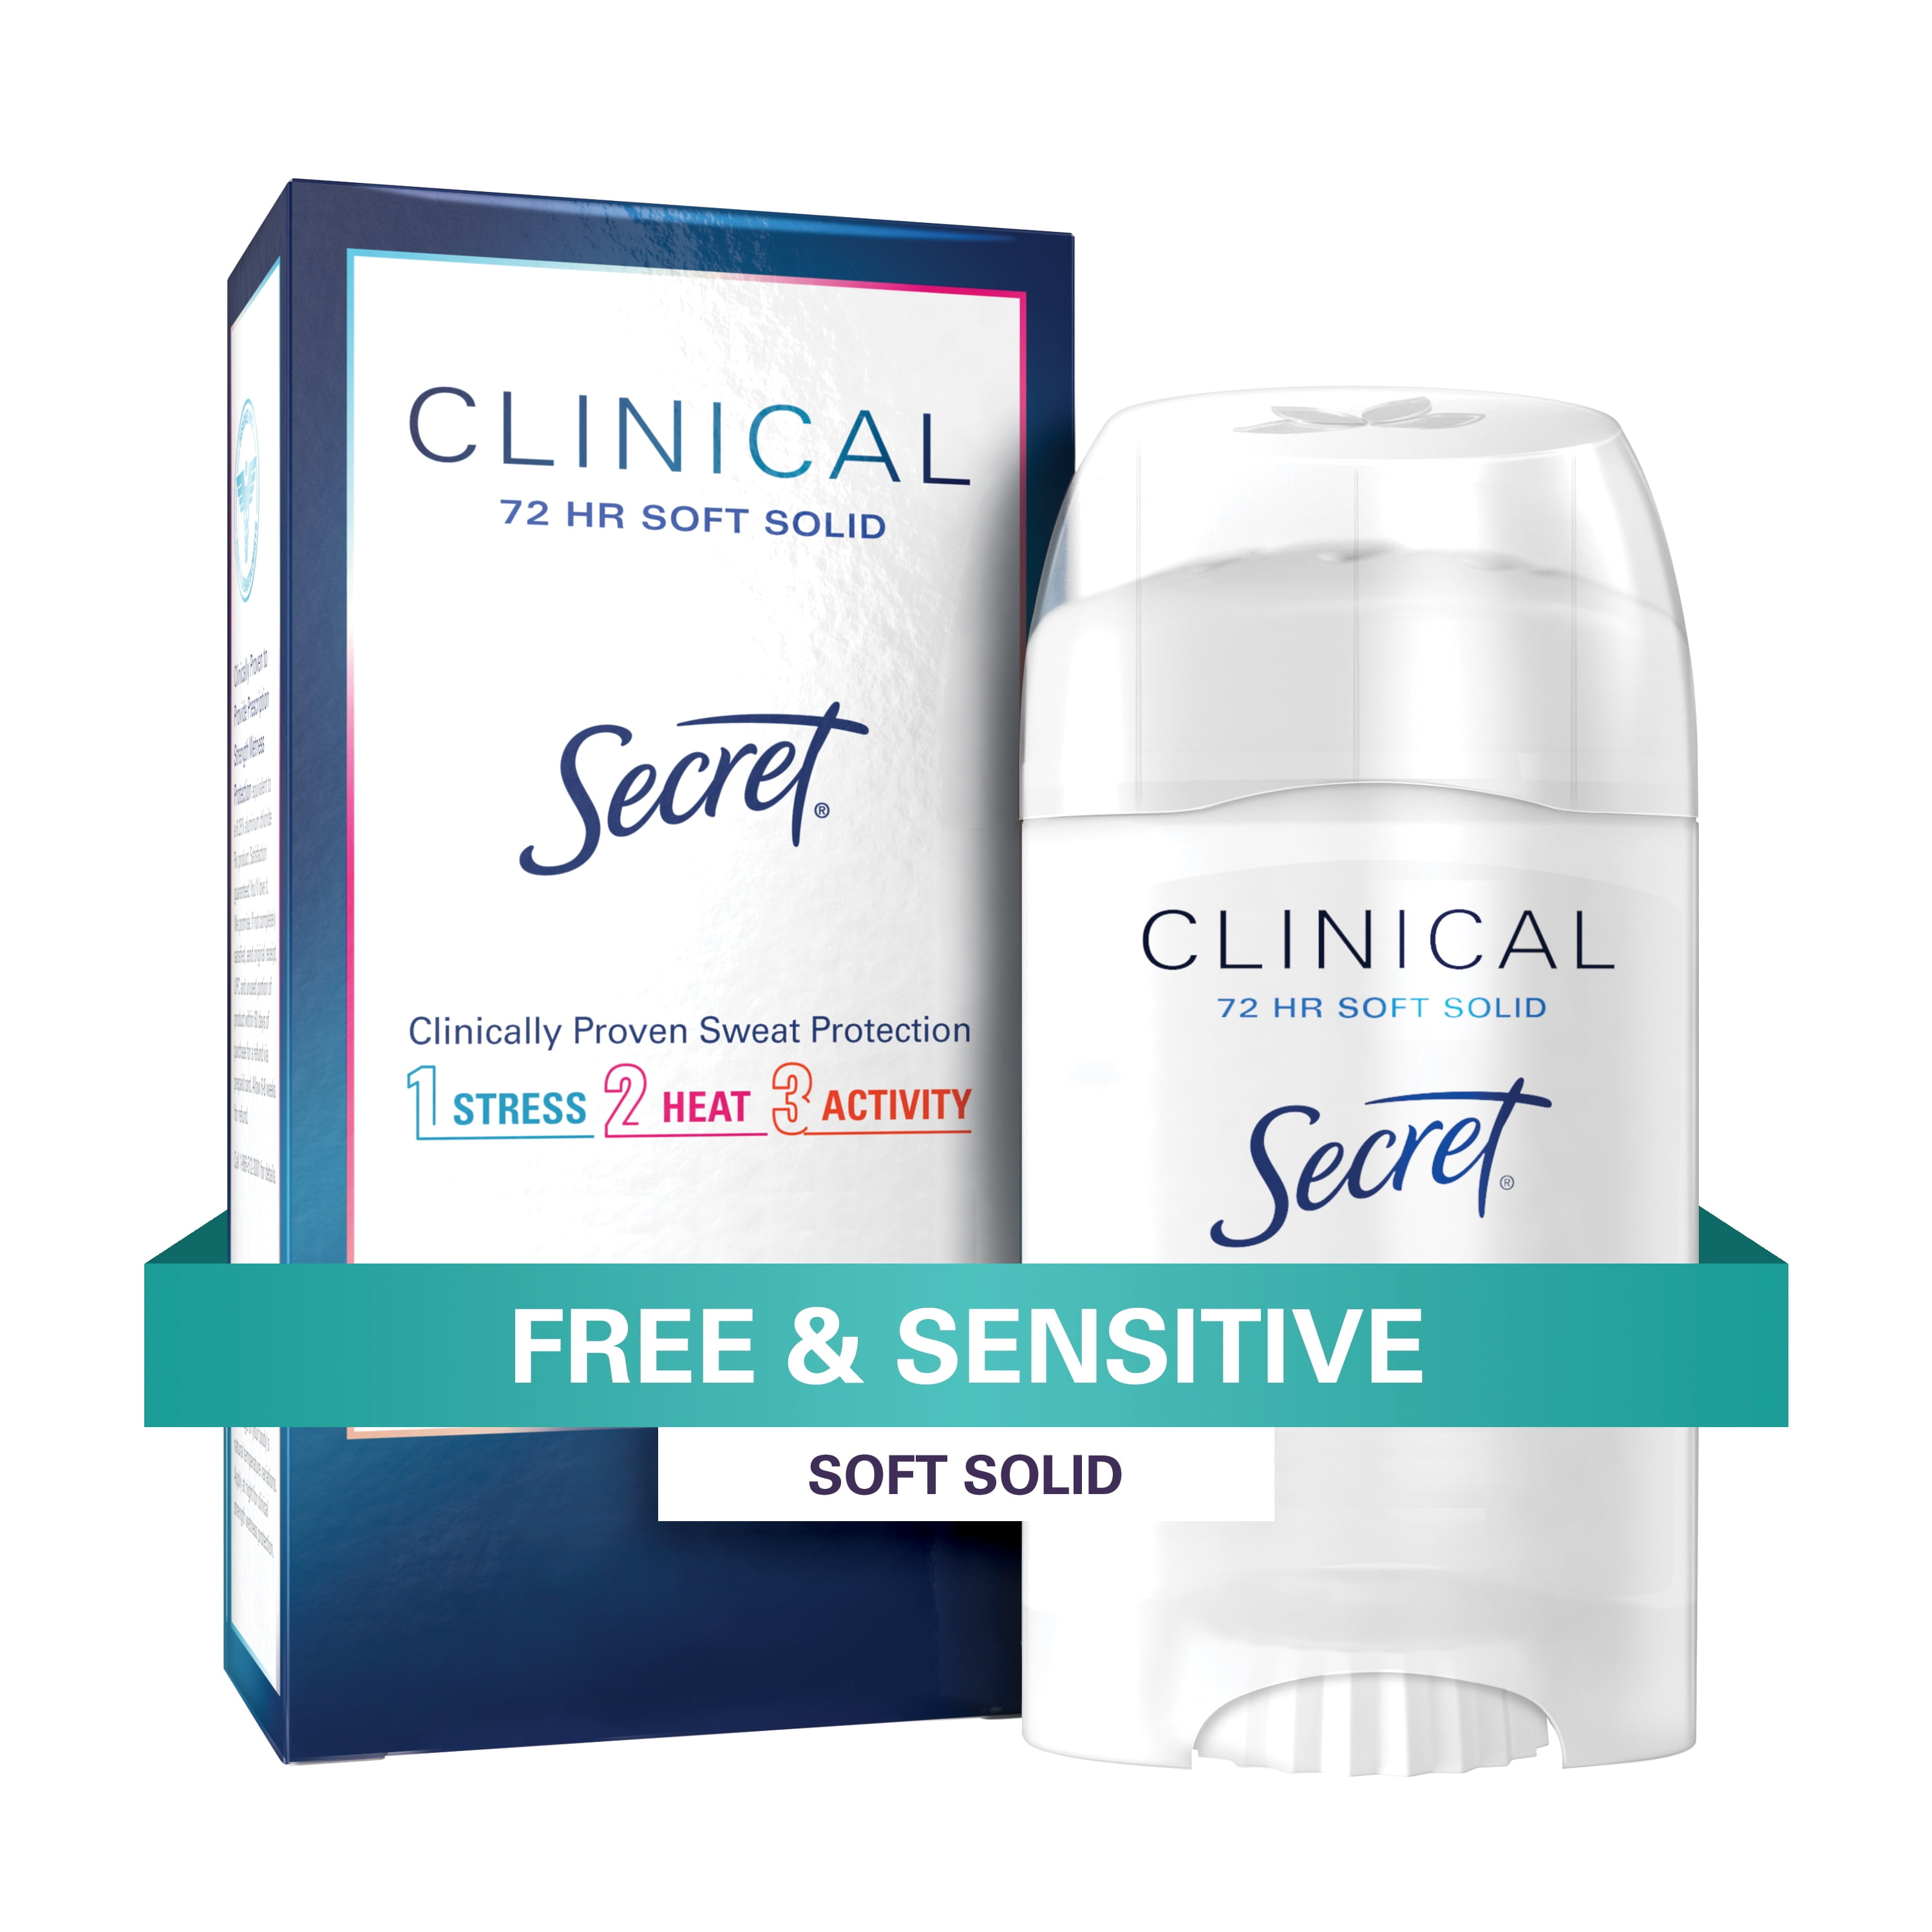 Secret Clinical Strength Soft Solid Antiperspirant and Deodorant, Free & Sensitive, 1.6 oz